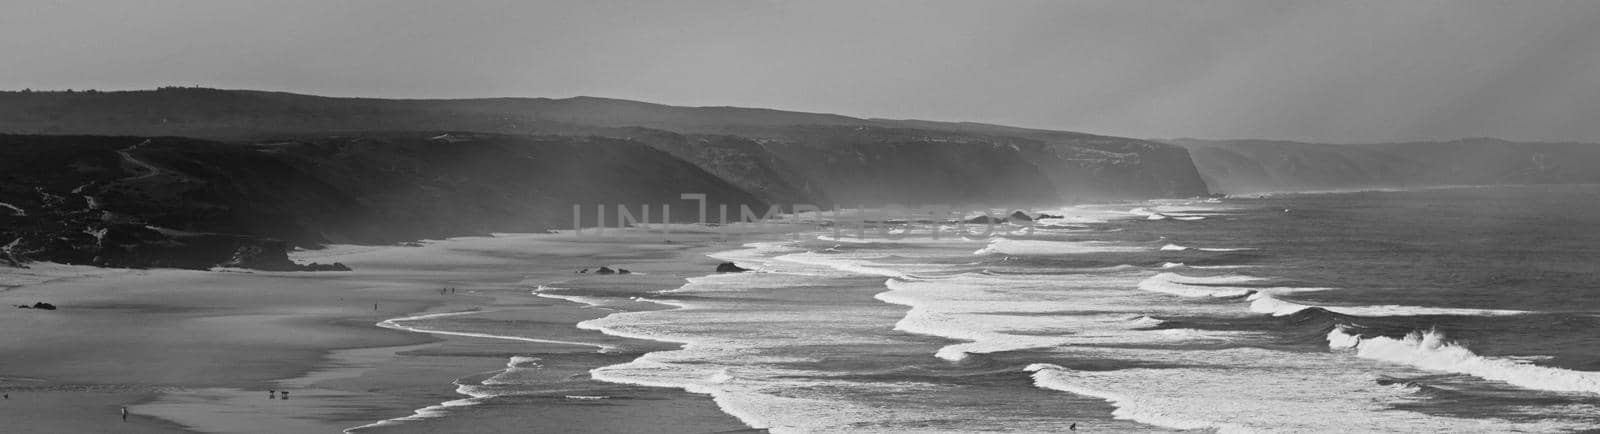 Coastal art print, monochrome and seascape concept - Atlantic ocean coast scenery, fine art